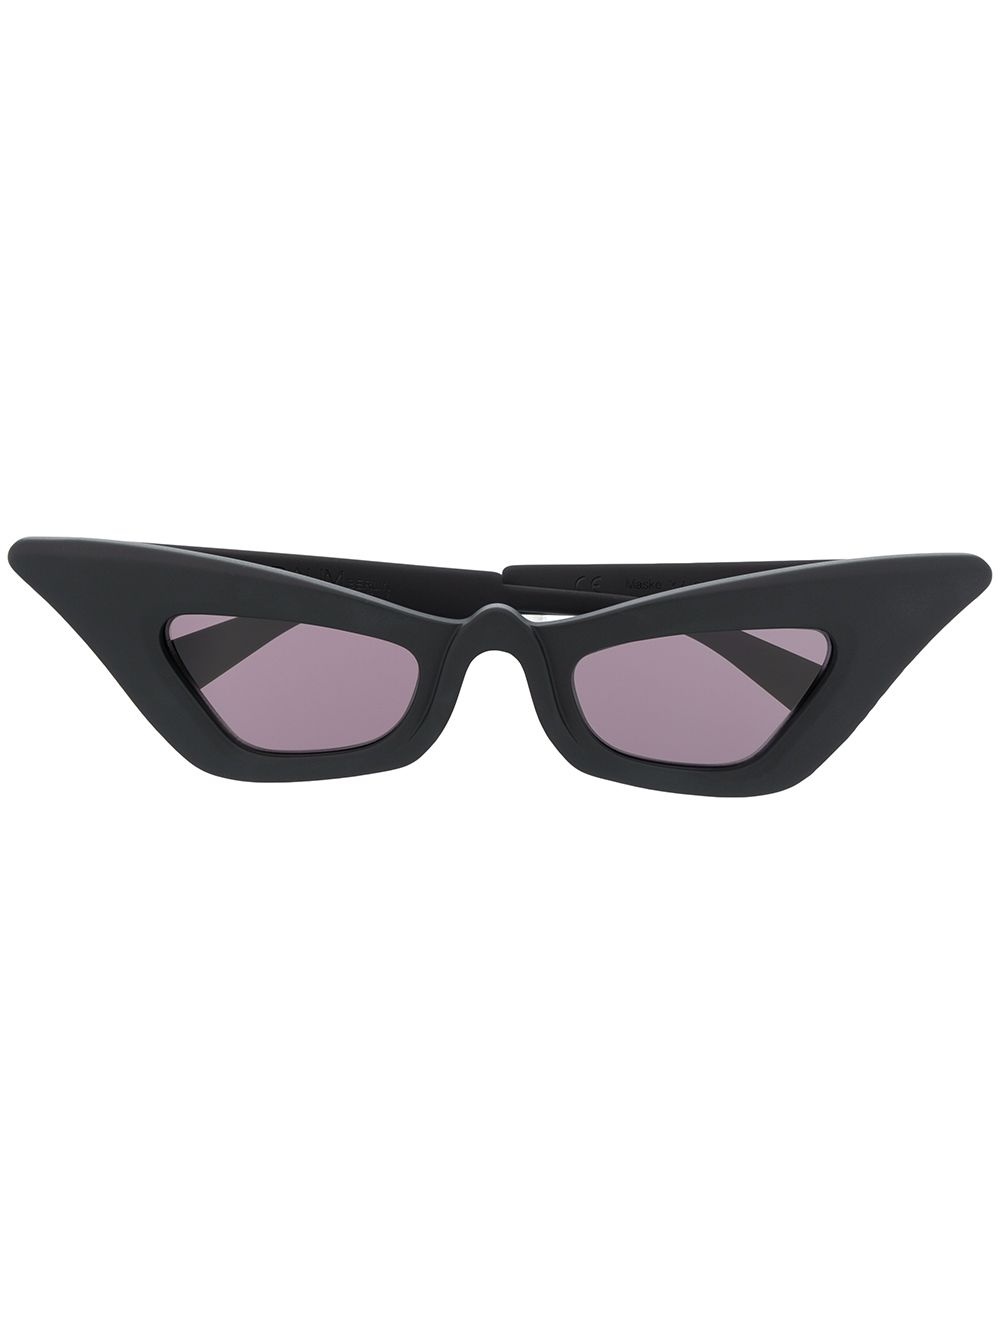 slim cat eye sunglasses - 1